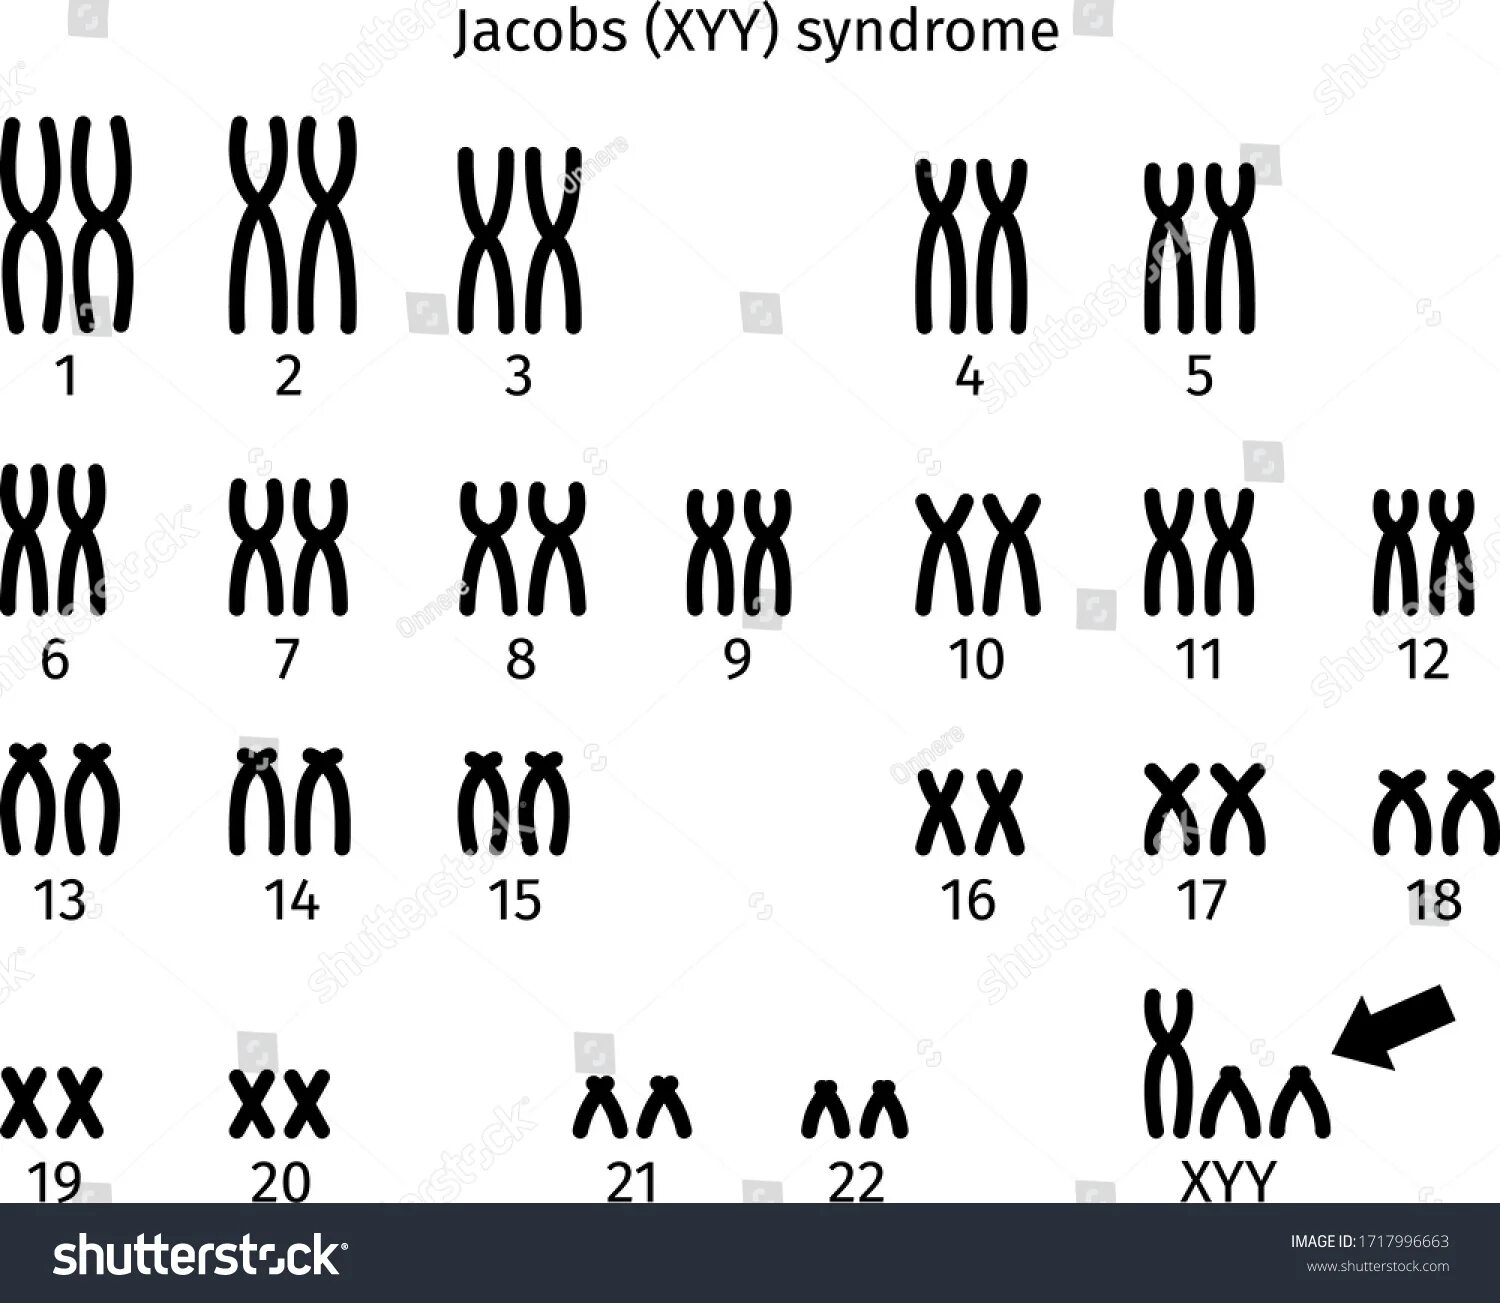 Хромосомы краба. 47 XYY кариотип. Синдром дисомии по у хромосоме кариотип. Klinefelter Syndrome karyotype. Дисомия по х хромосоме у мужчин кариотип.